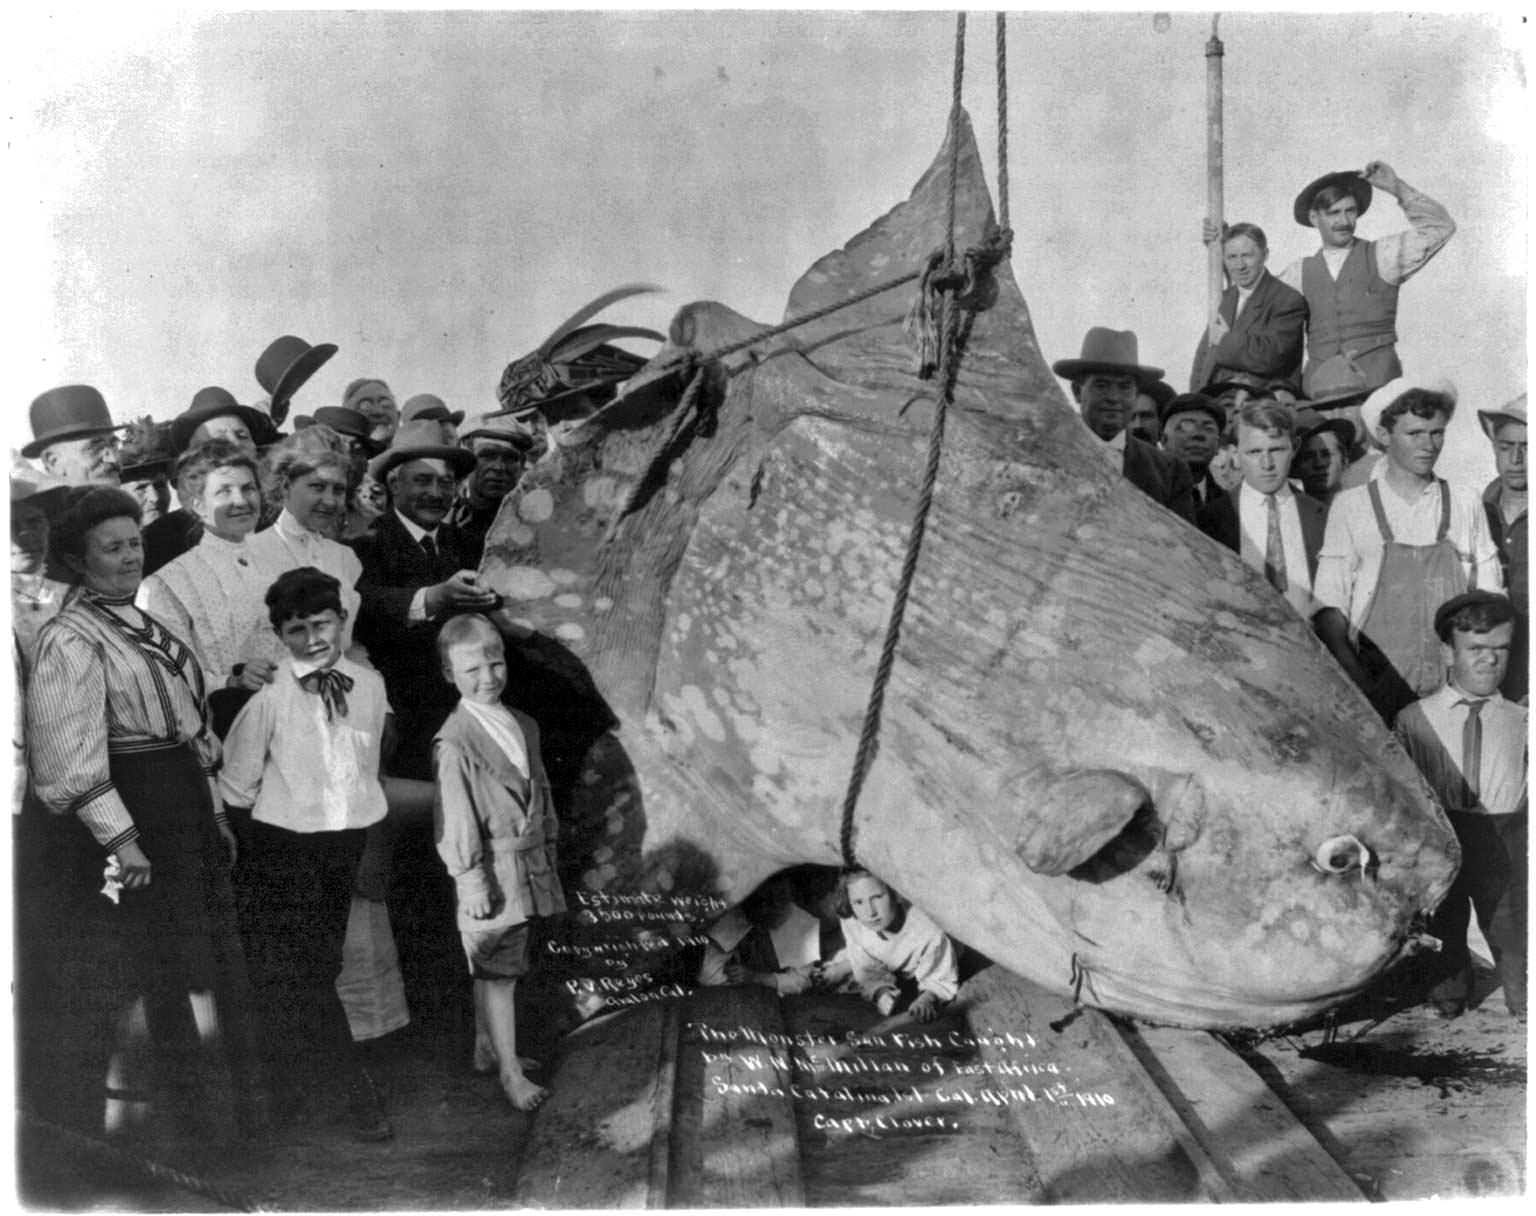 A 3,500 pound monster sun fish caught by W.N. McMillan at Santa Catalina Island, California, US in 1910.